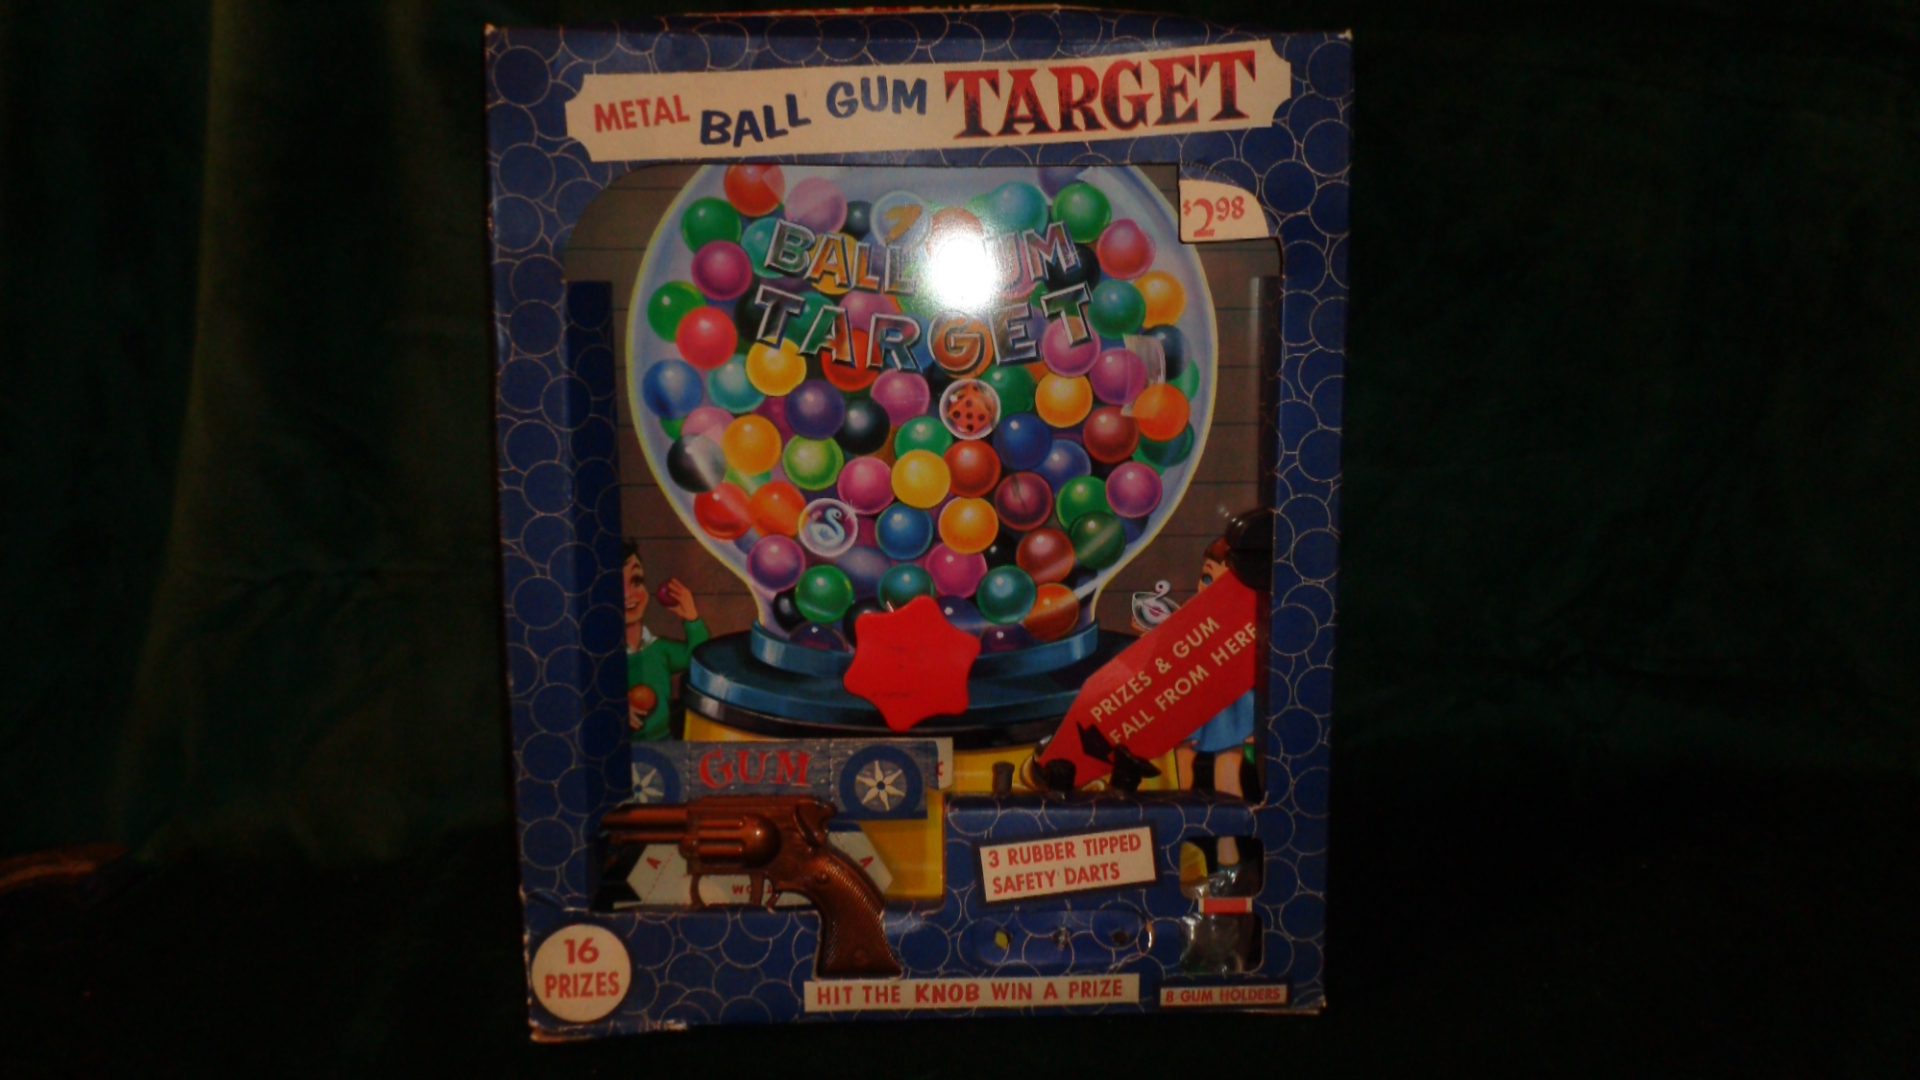 Metal Ball Gum Target